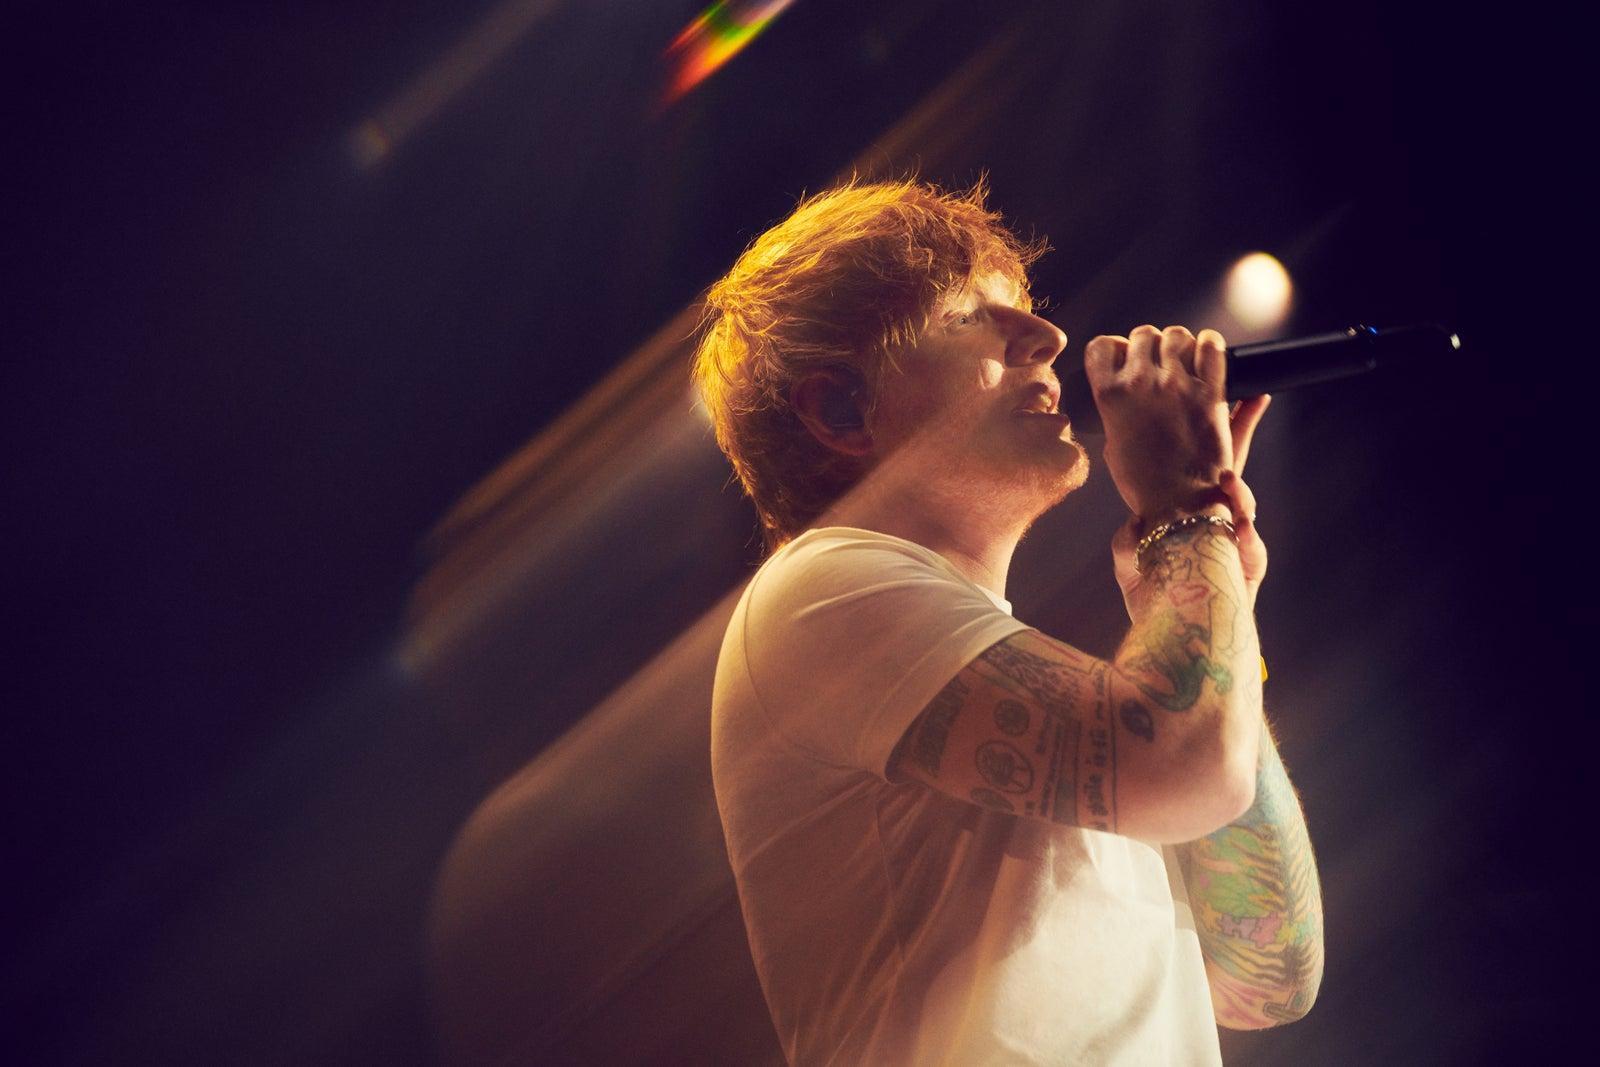 Image Gallery For Apple Music Live Ed Sheeran Filmaffinity